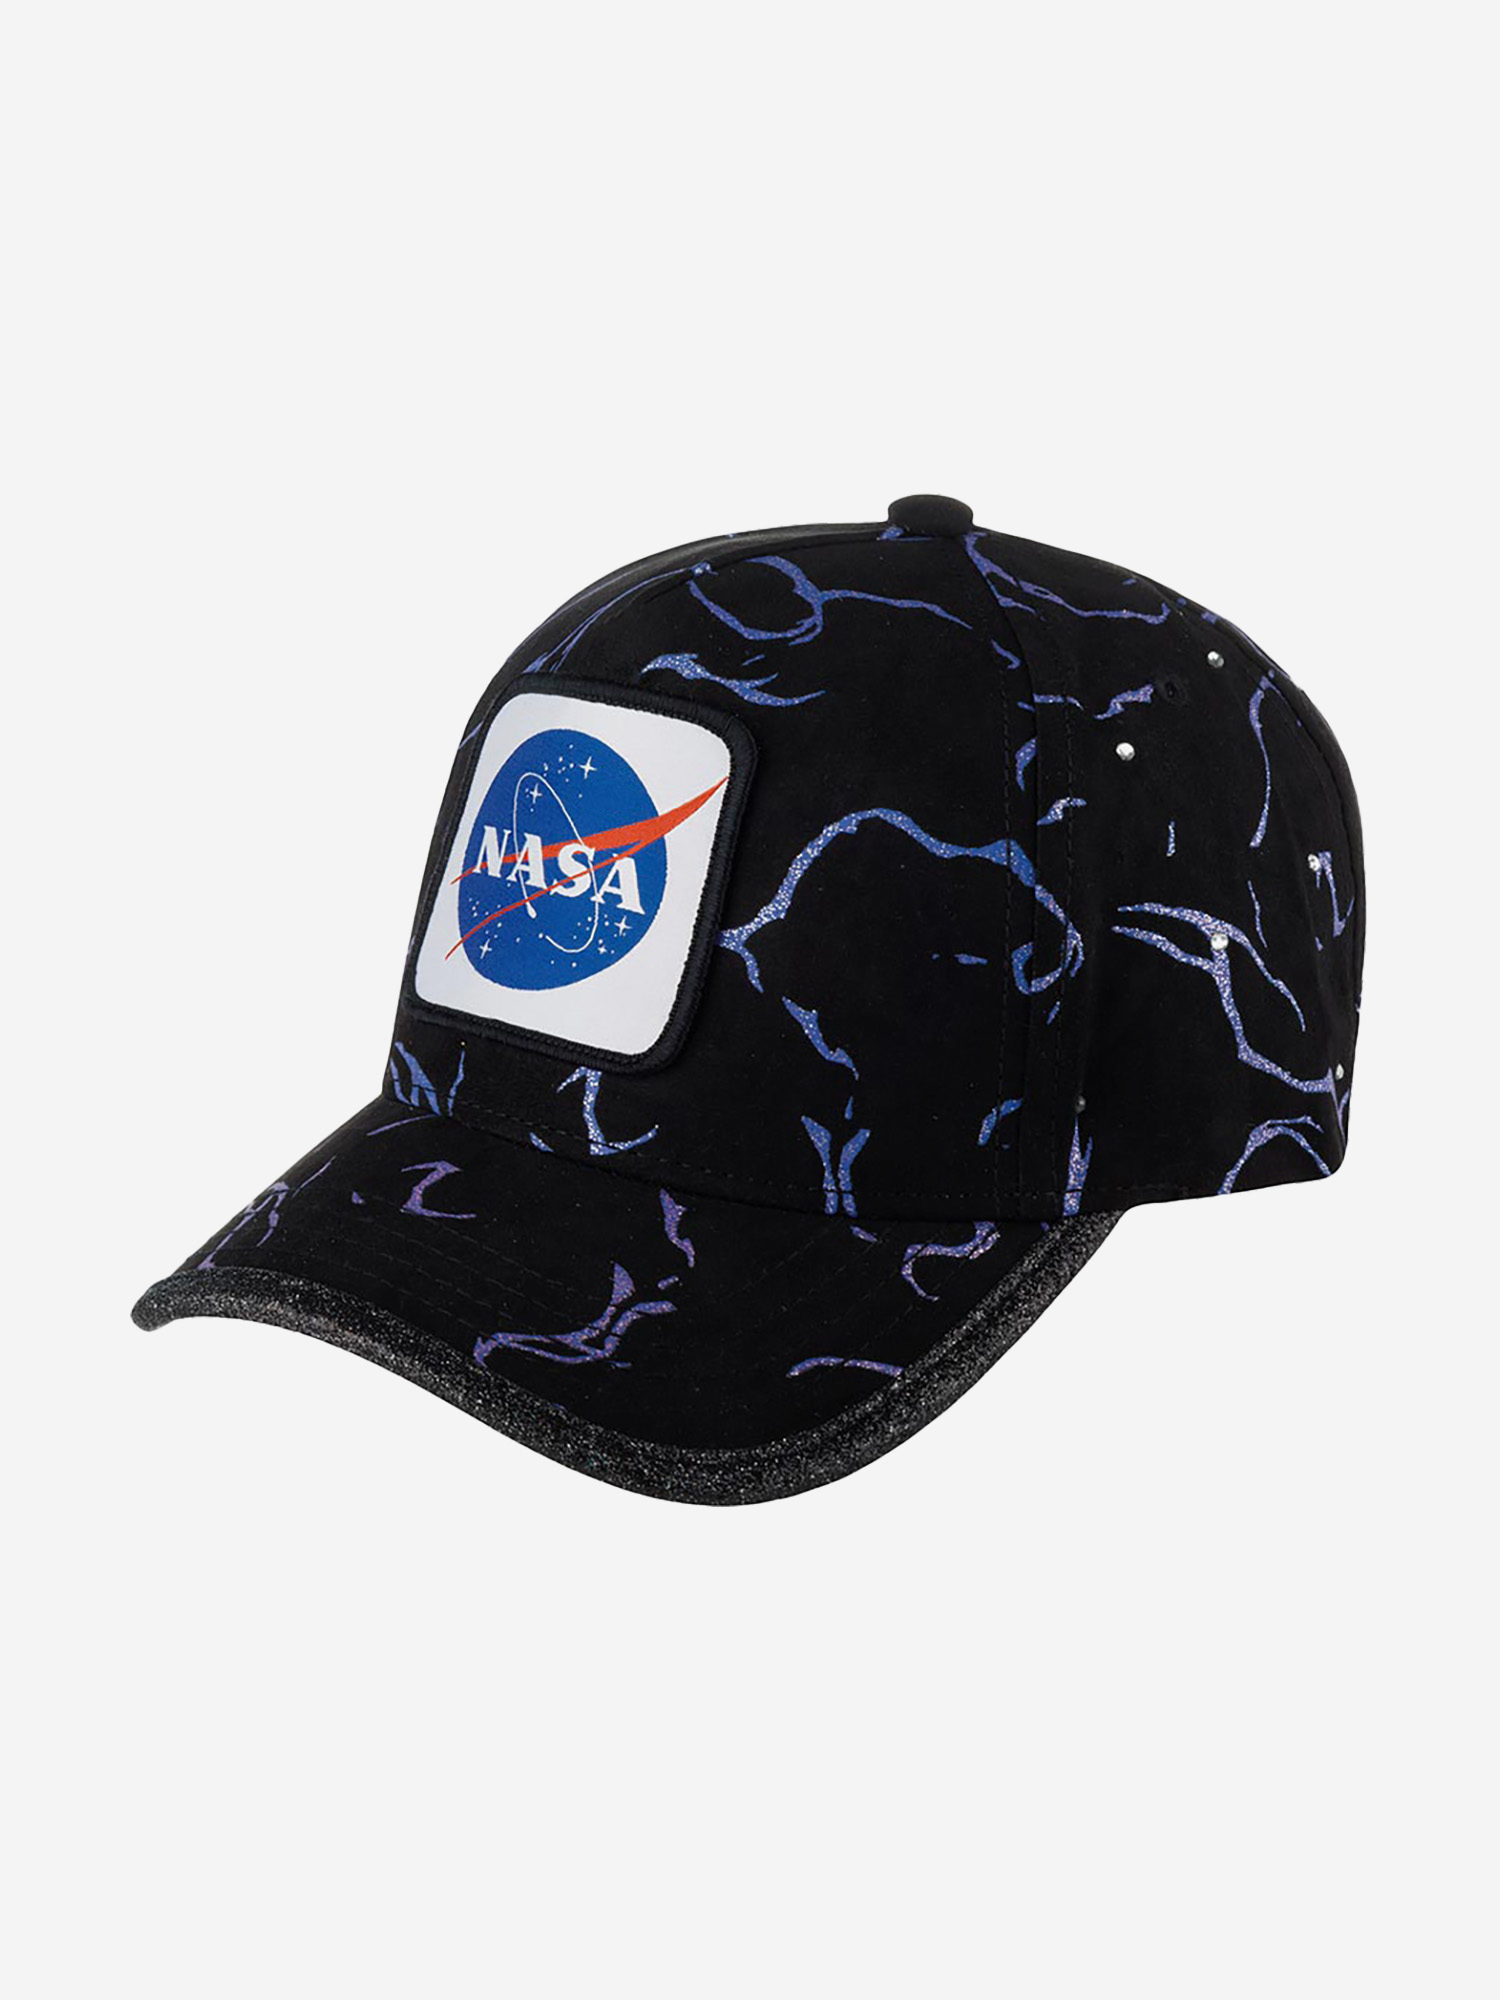 Бейсболка CAPSLAB CL/NASA/1/TAG/GLI NASA (черный), Черный бейсболка american needle 45000a nasa space with nasa голубой голубой